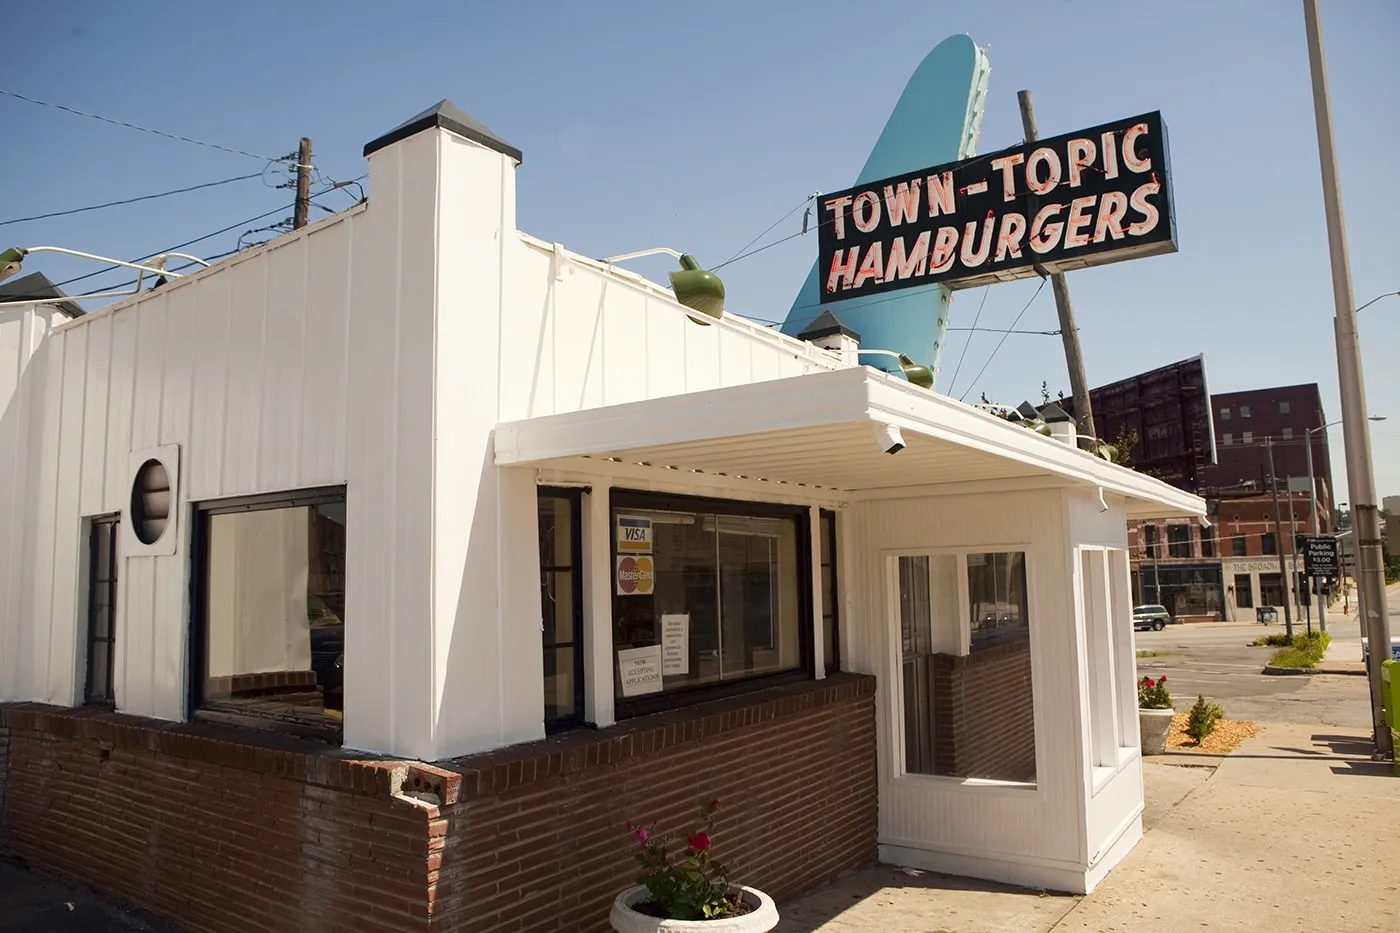 Town Topic Hamburgers in Kansas City, Missouri